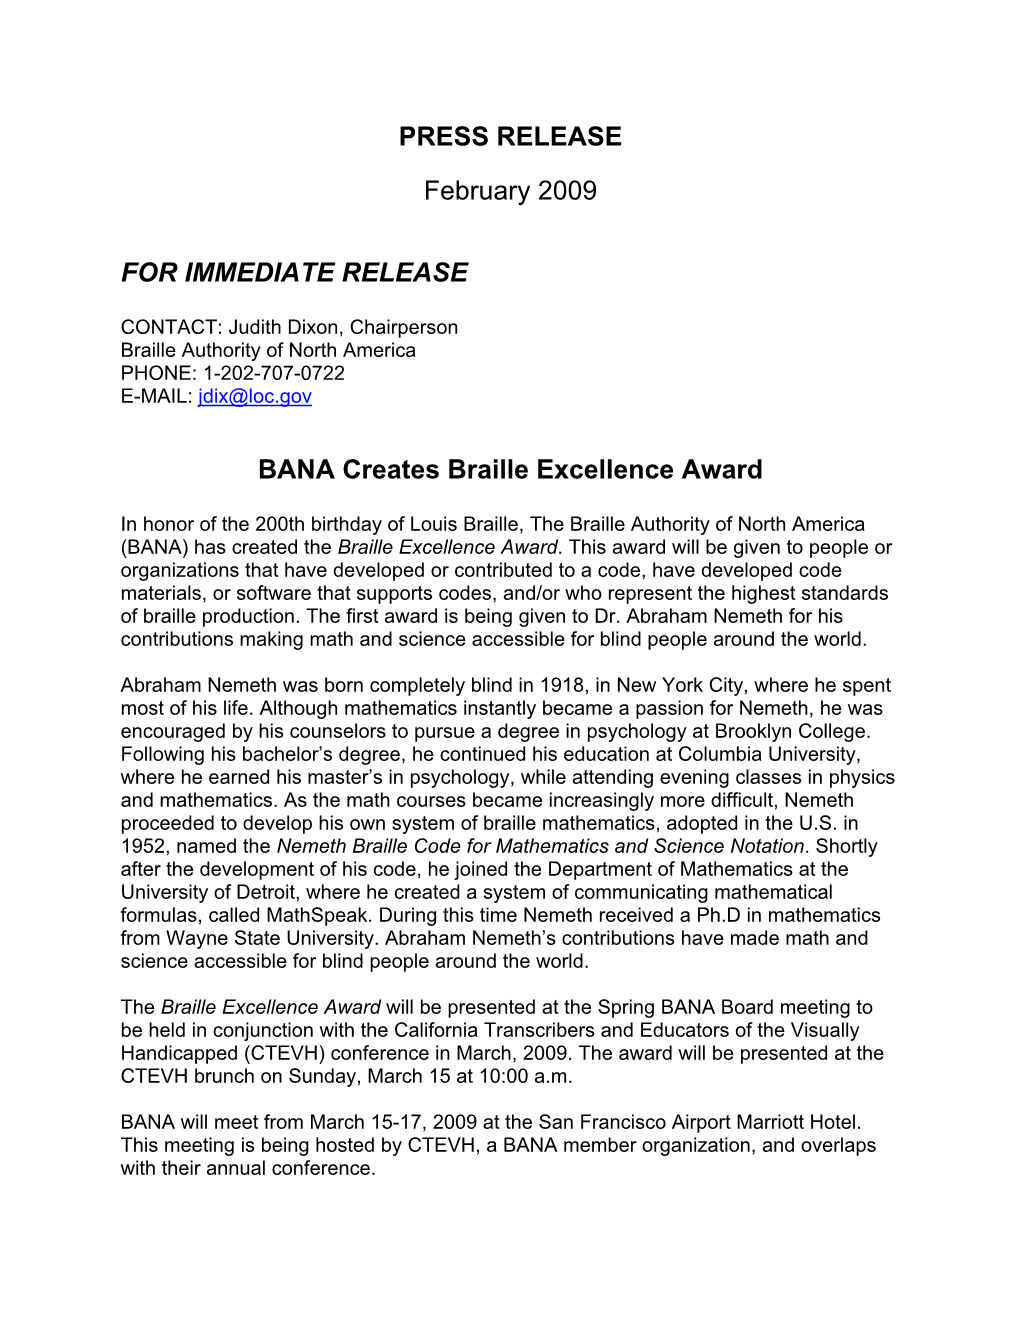 February 2009: BANA Creates Excellence Award